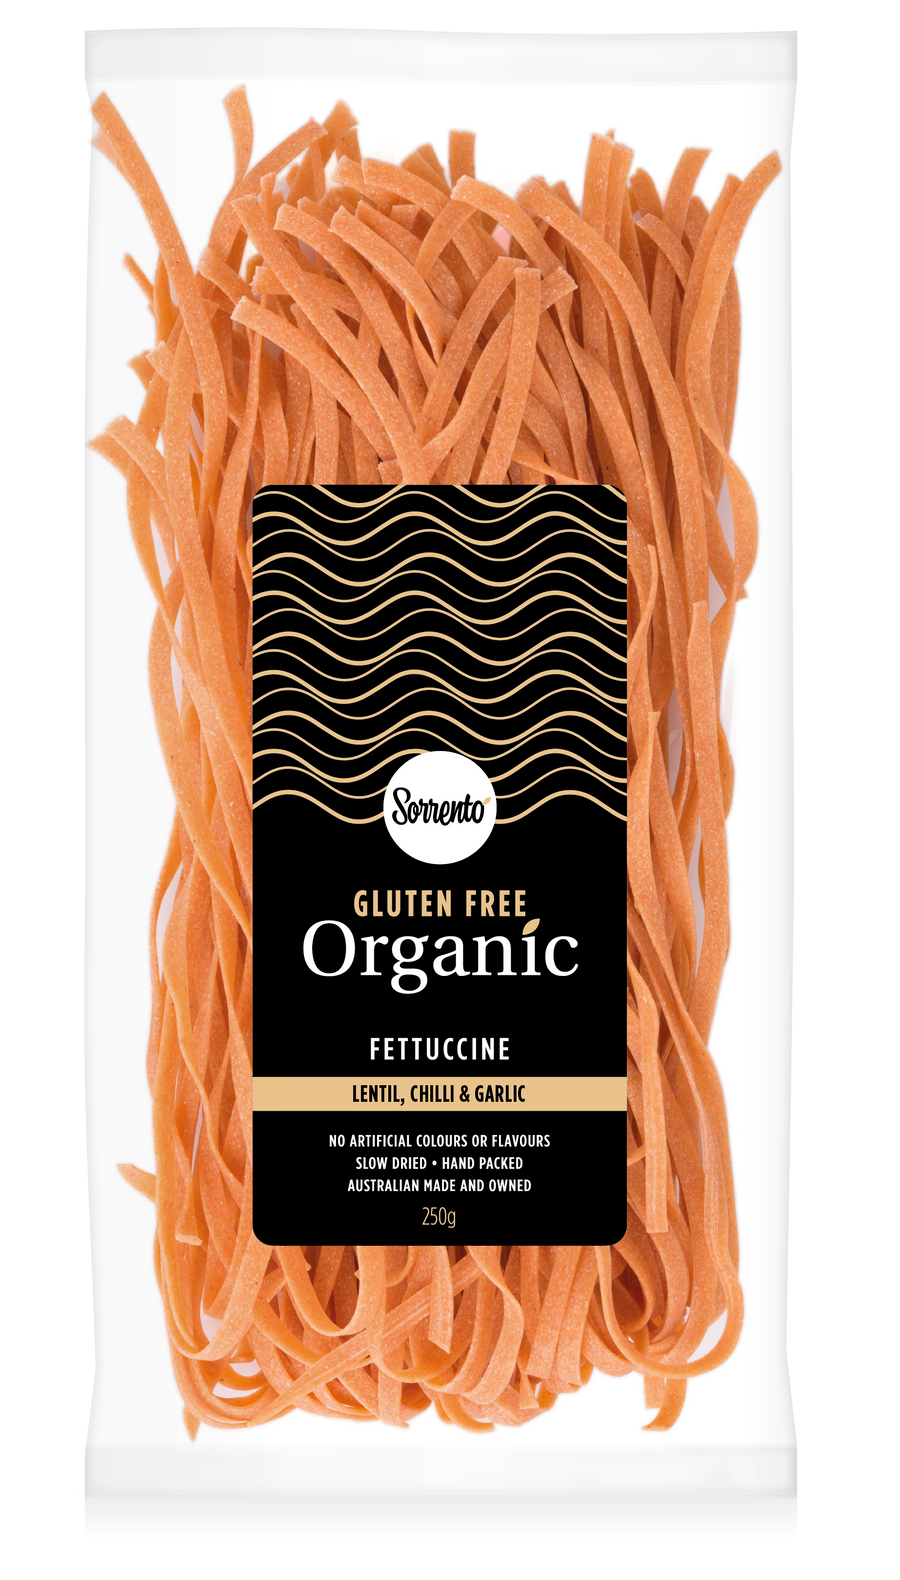 Sorrento Organic & Gluten Free Fettuccine - Bellco Group Fine Food Distributers